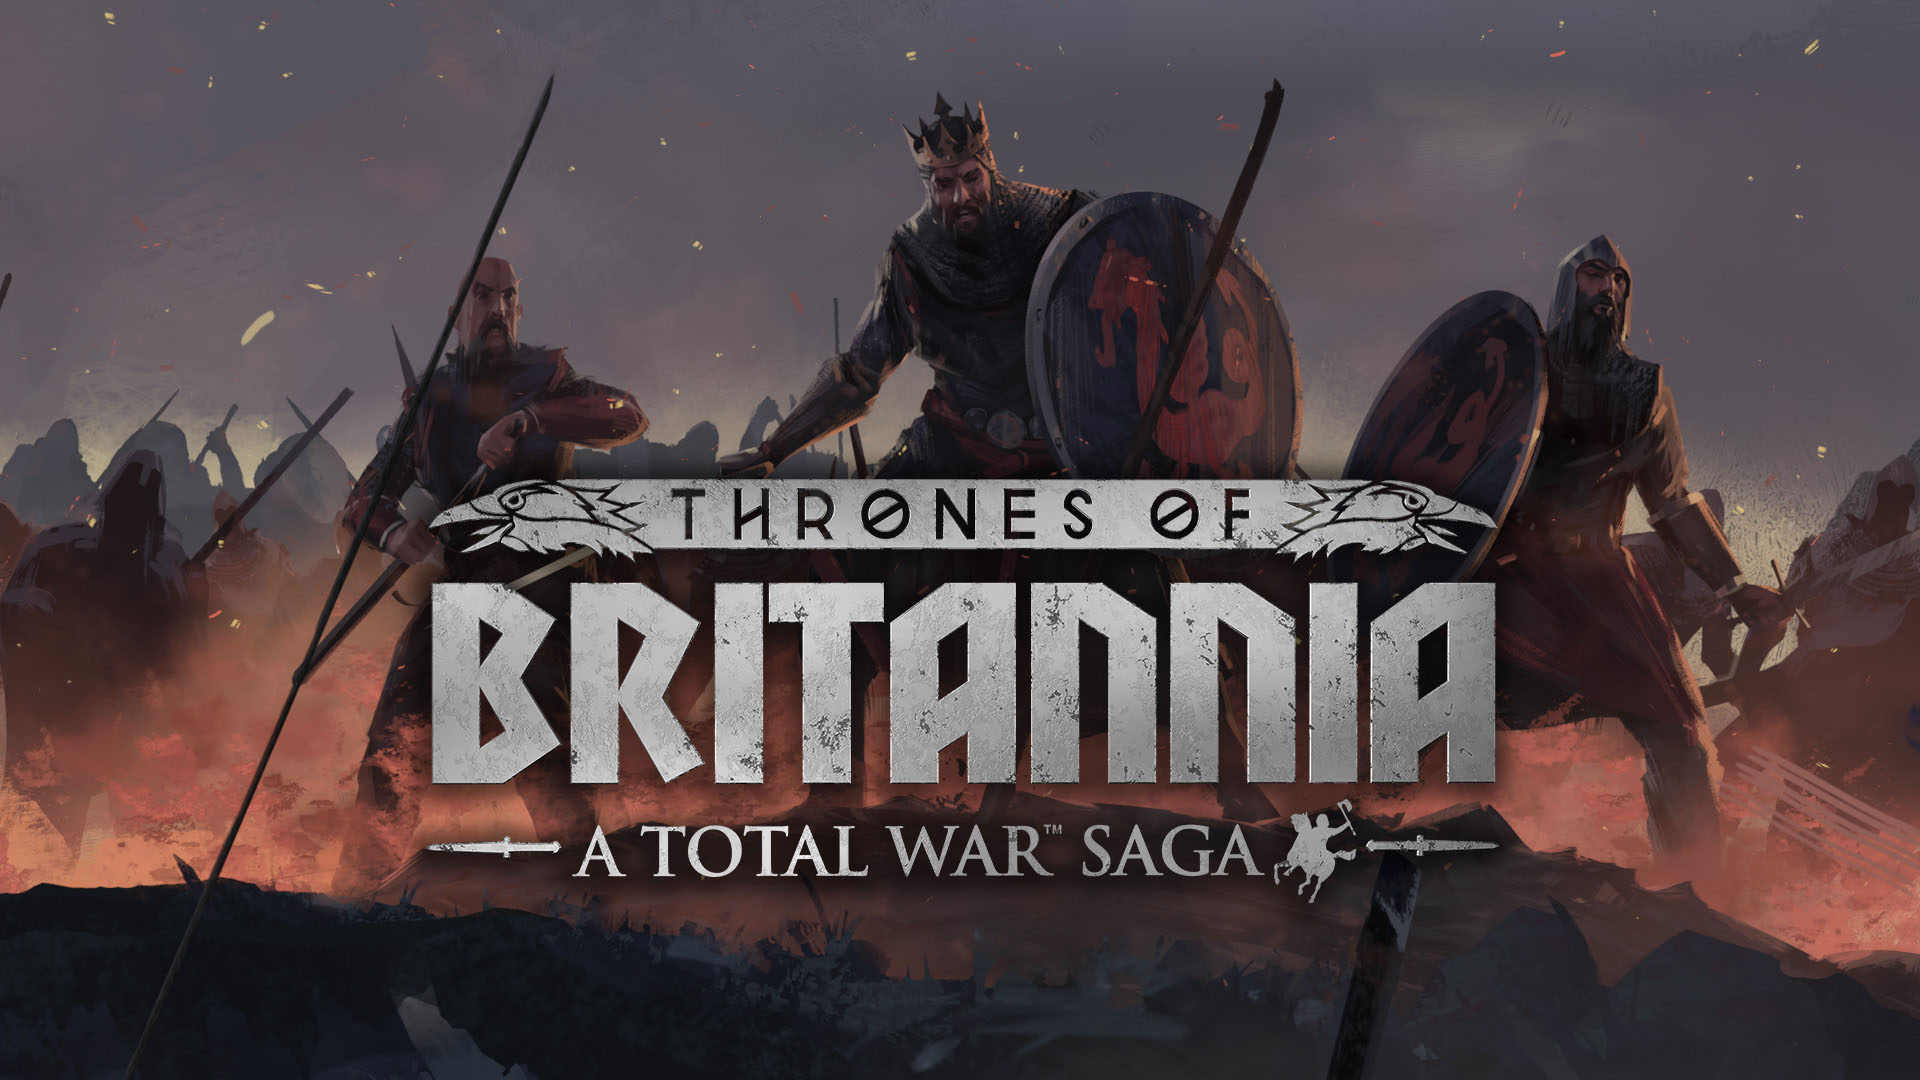 Total War Saga Thrones of Britannia cpy download